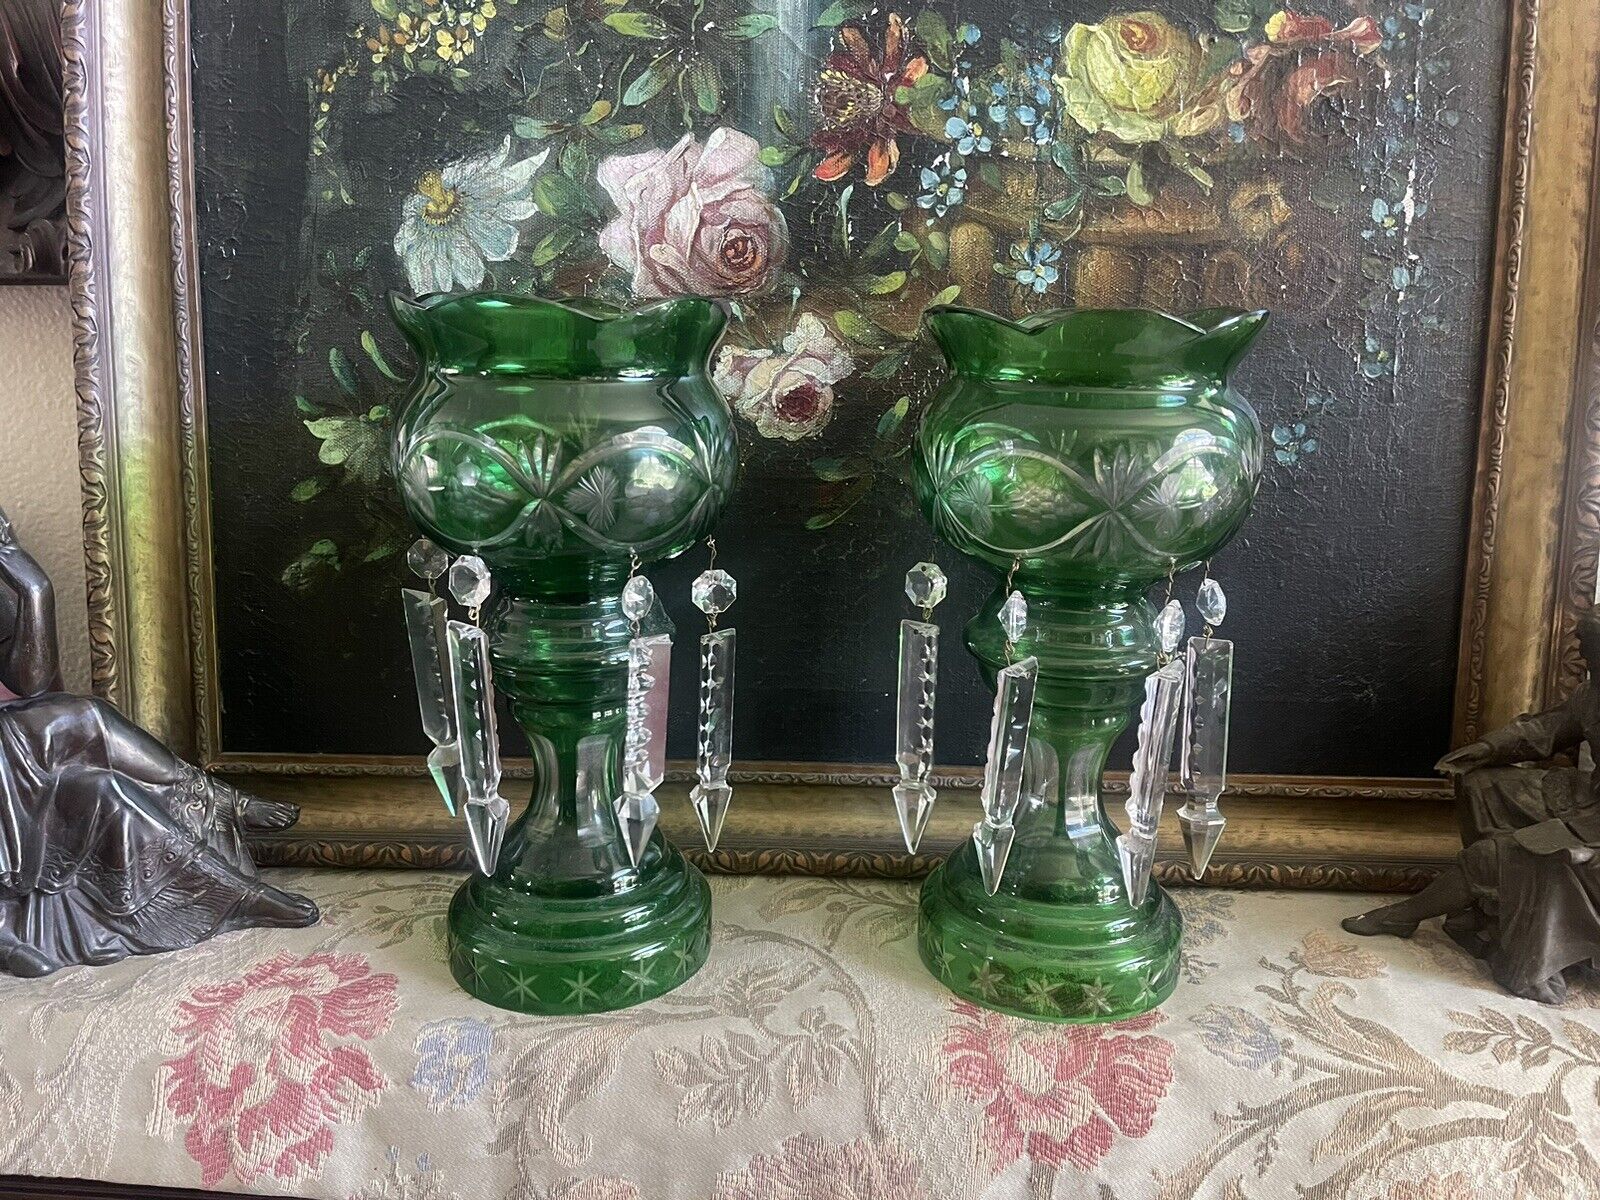 2 Antique Green Etched Glass Mantle Lusters - Floral Prisms - Estate Find